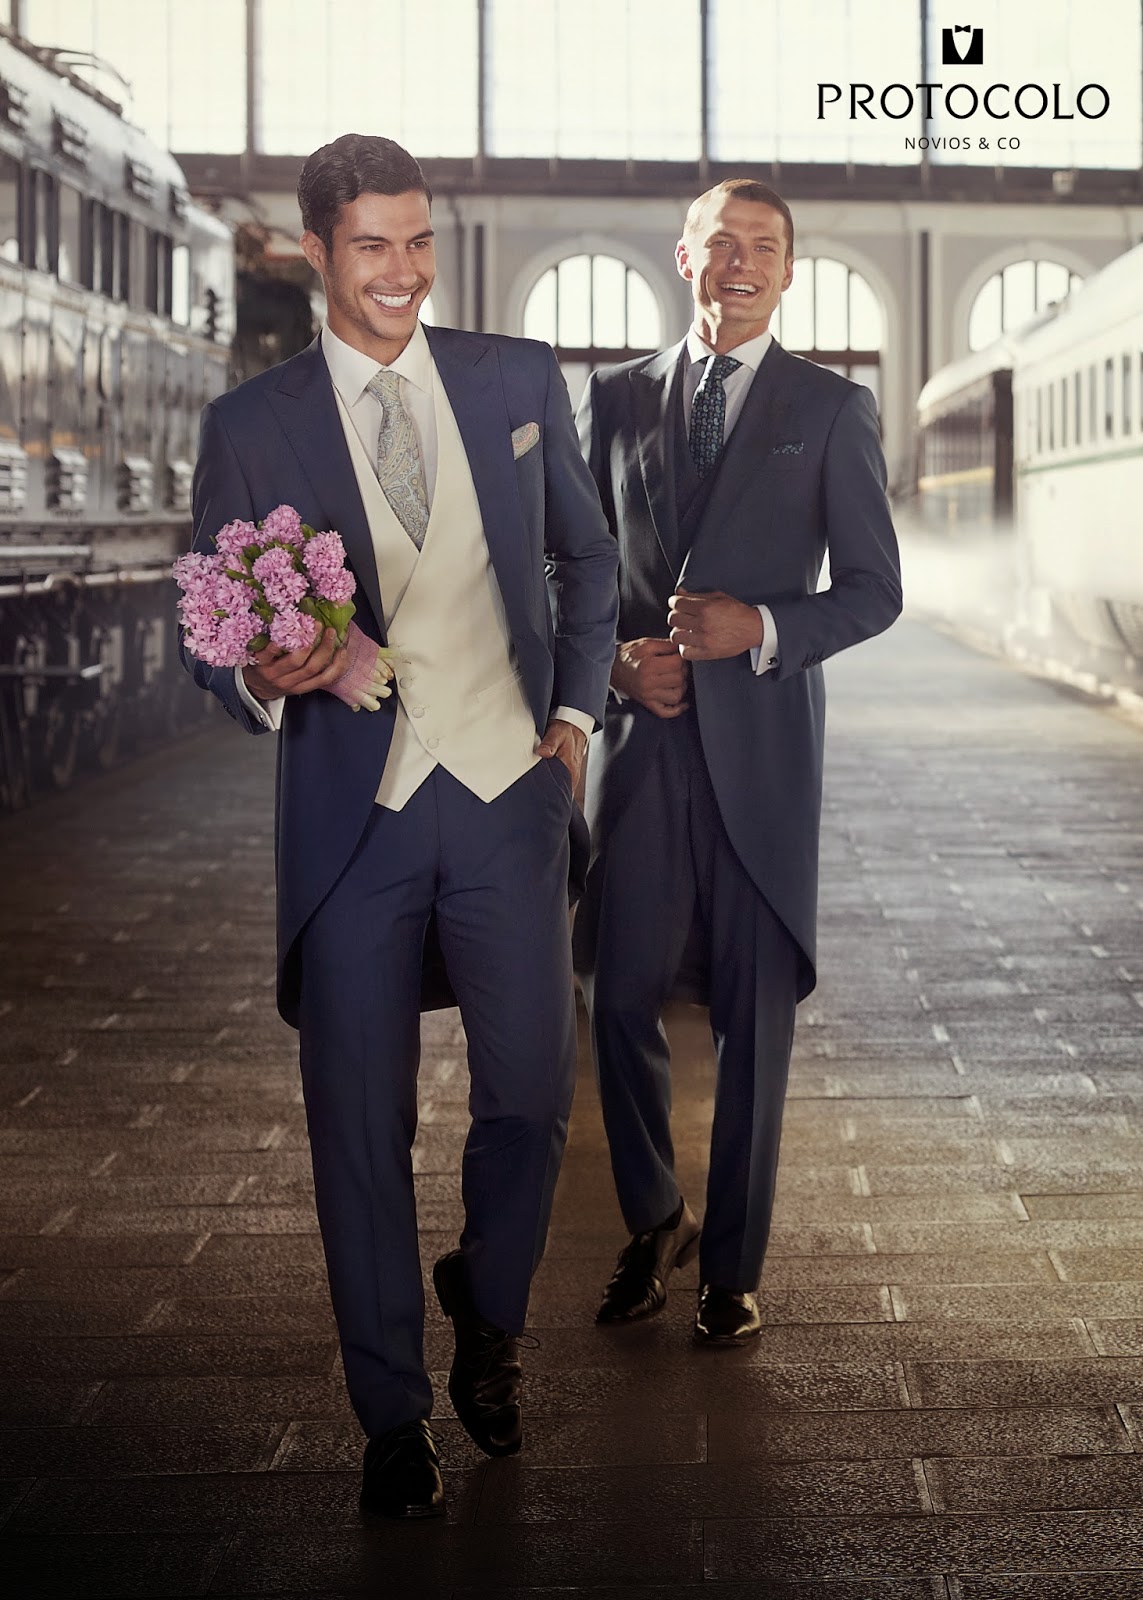 Protocolo novios guia tipos de traje de novio - chaqué blog bodas mi boda gratis